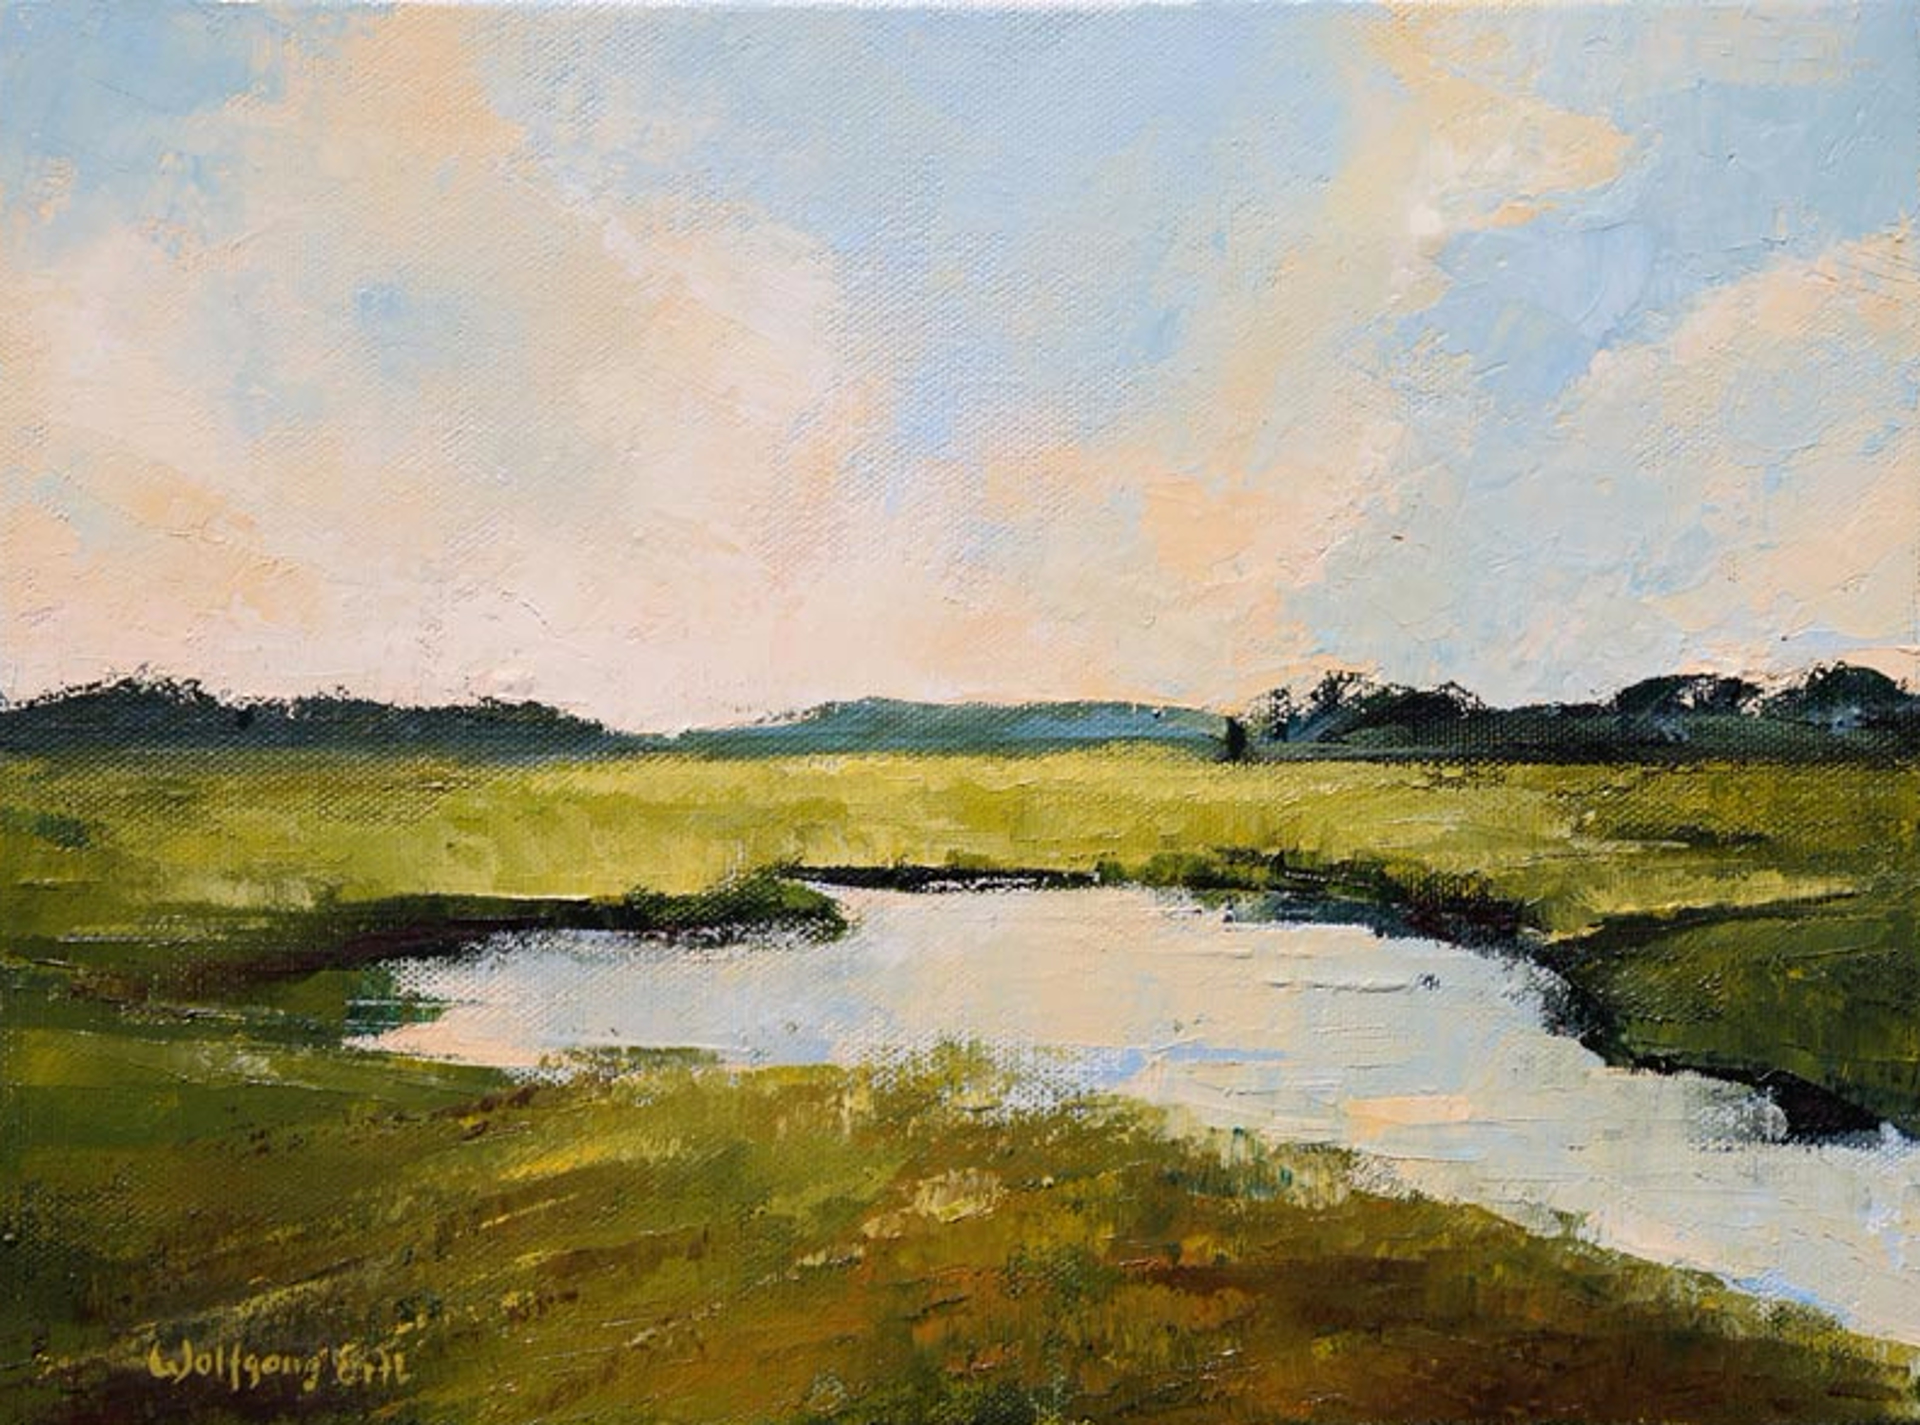 Rye Marsh Evening by Wolfgang Ertl